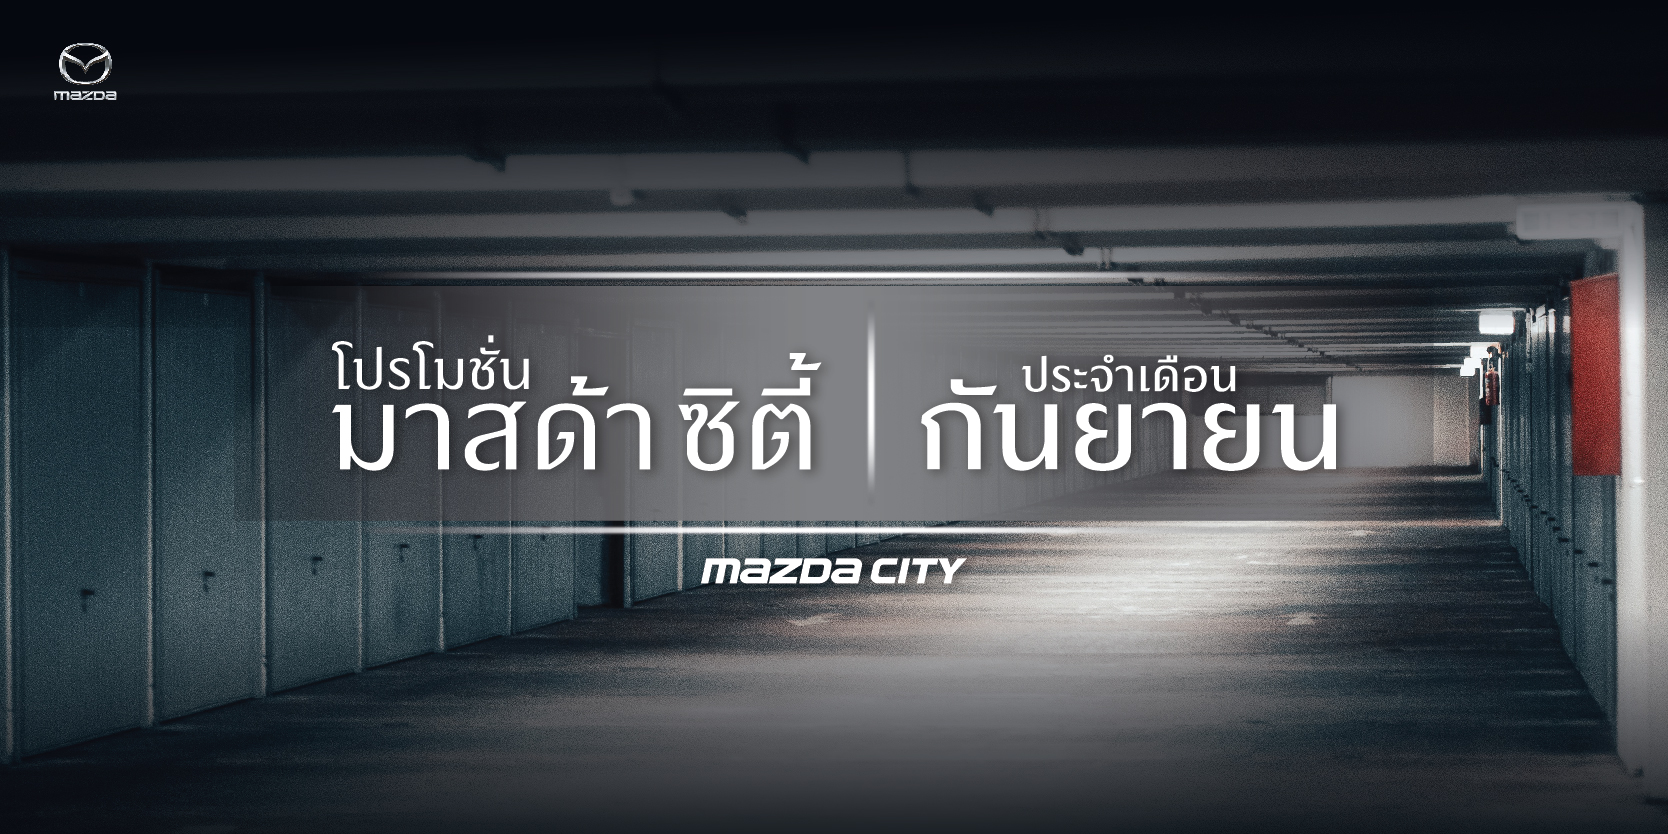 [ MazdaCity ] AW.CampaignOfTheMonth_OfficialPAGE (SEP) - โปรโมชั่น Mazda